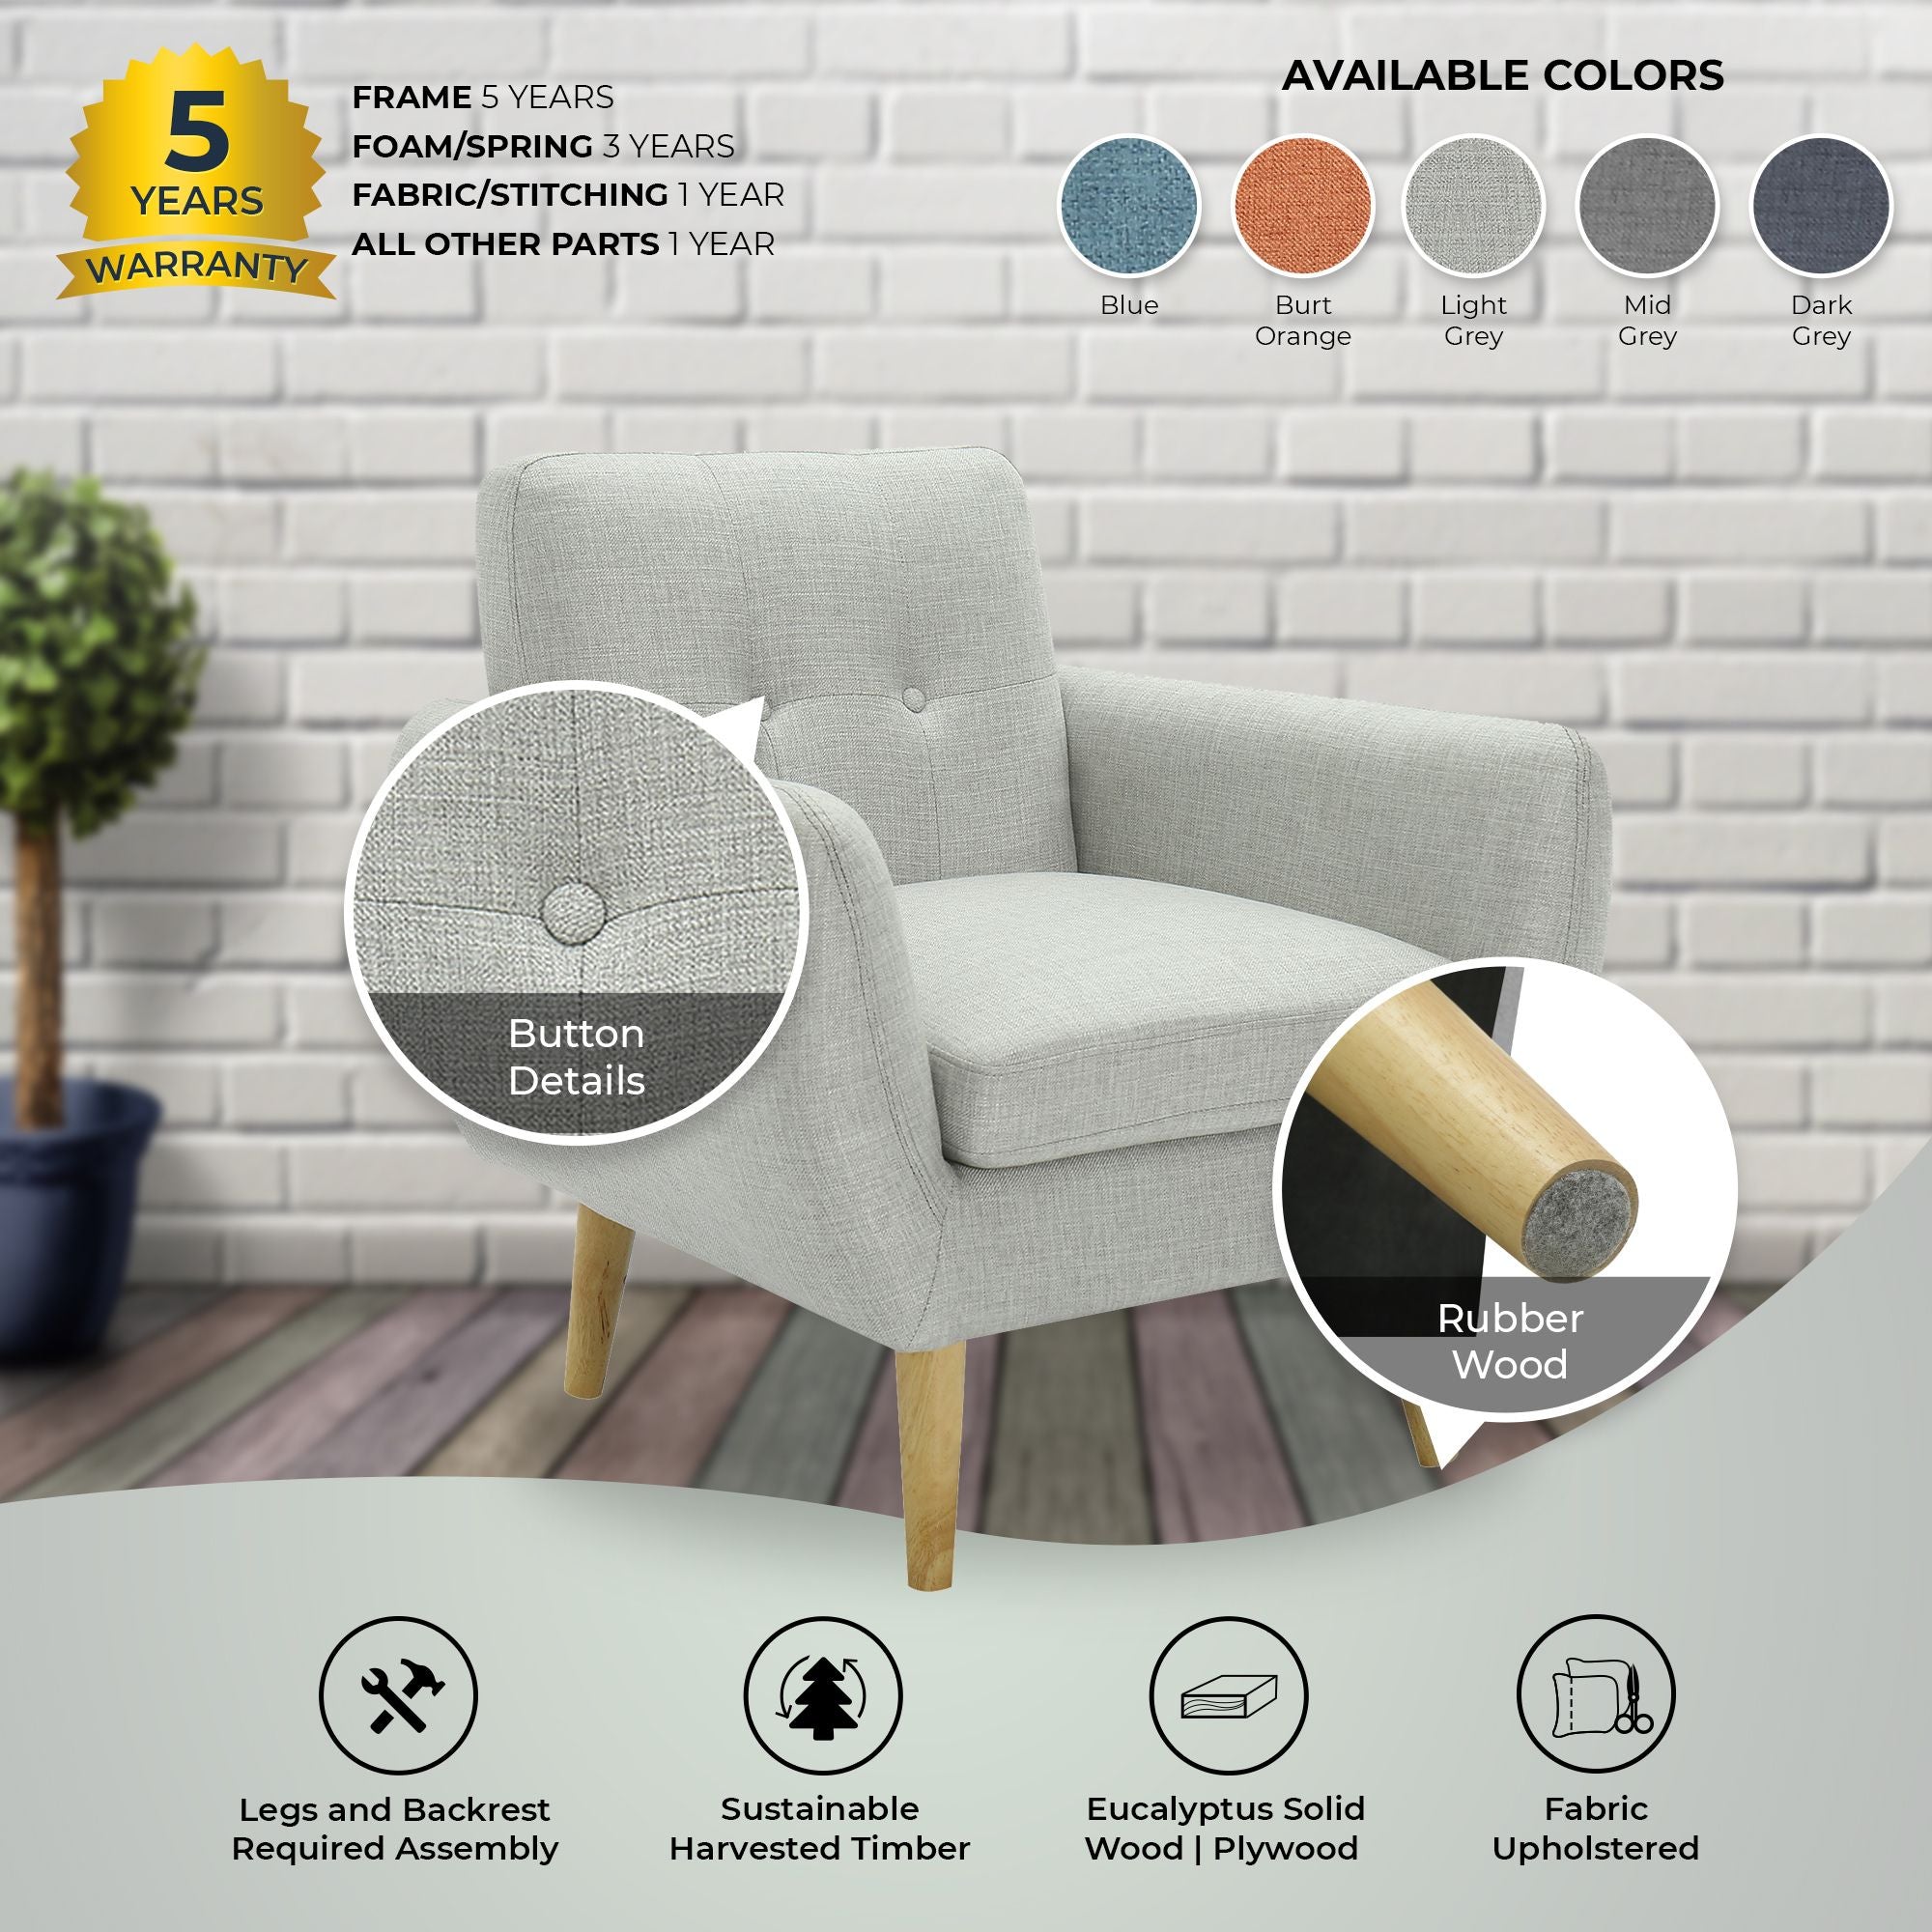 Dane Single Seater Fabric Upholstered Sofa Armchair Set of 2 - Light Grey.